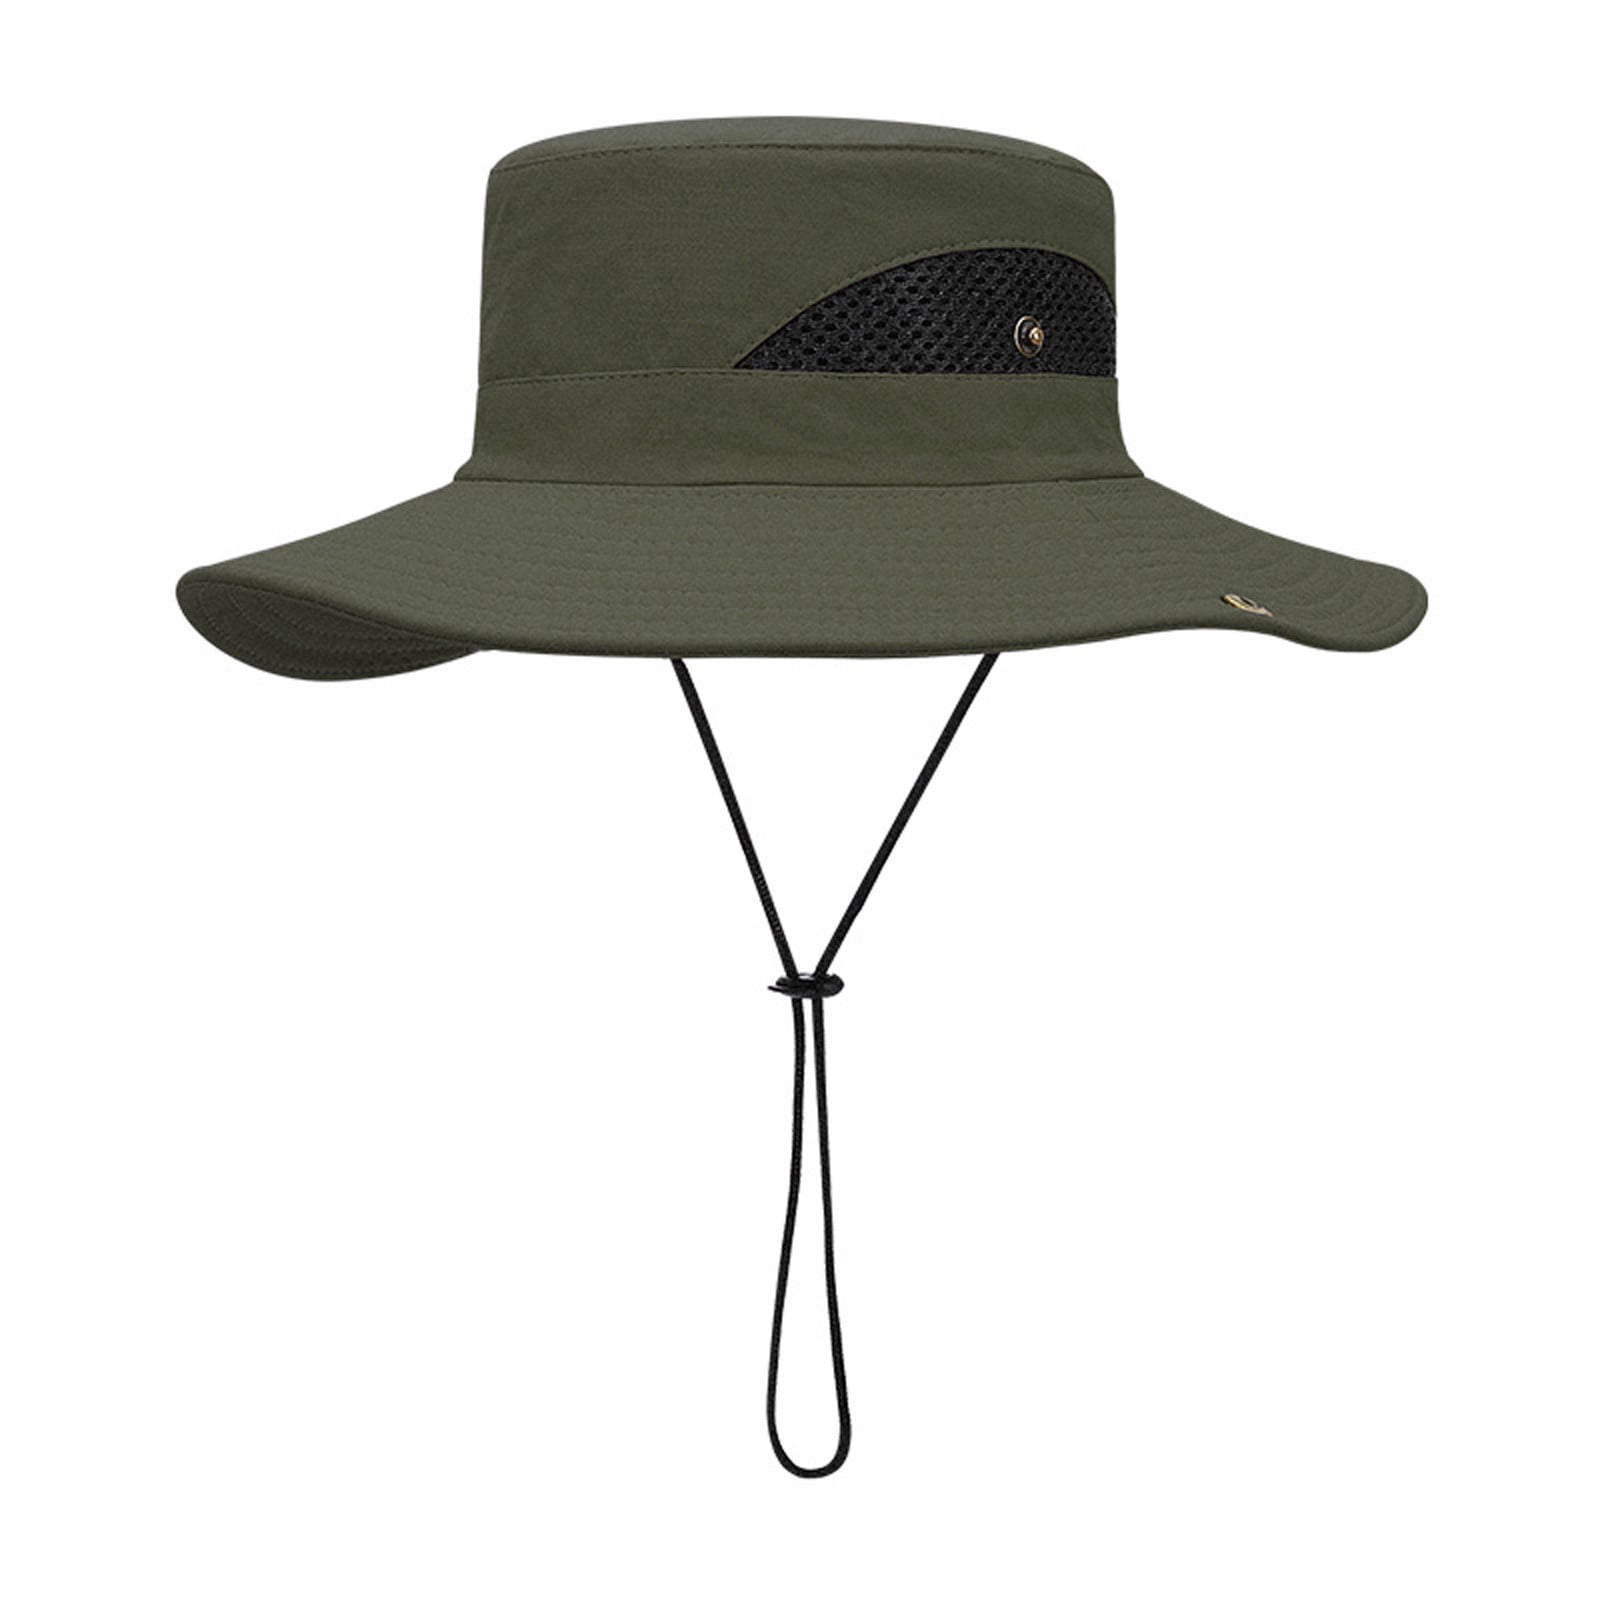 Ouneed Men Sun Cap Fishing Hat Quick Dry Outdoor Hat UV Protection Cap